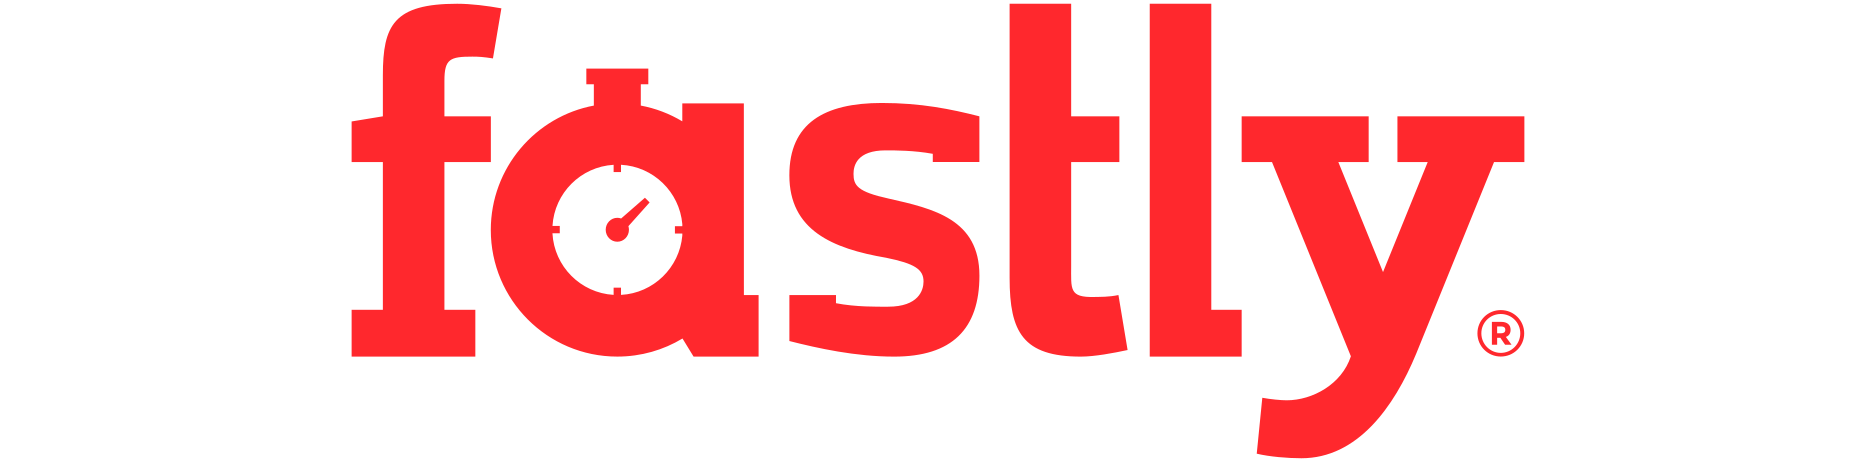 Mkto_Fastly_Logo.png